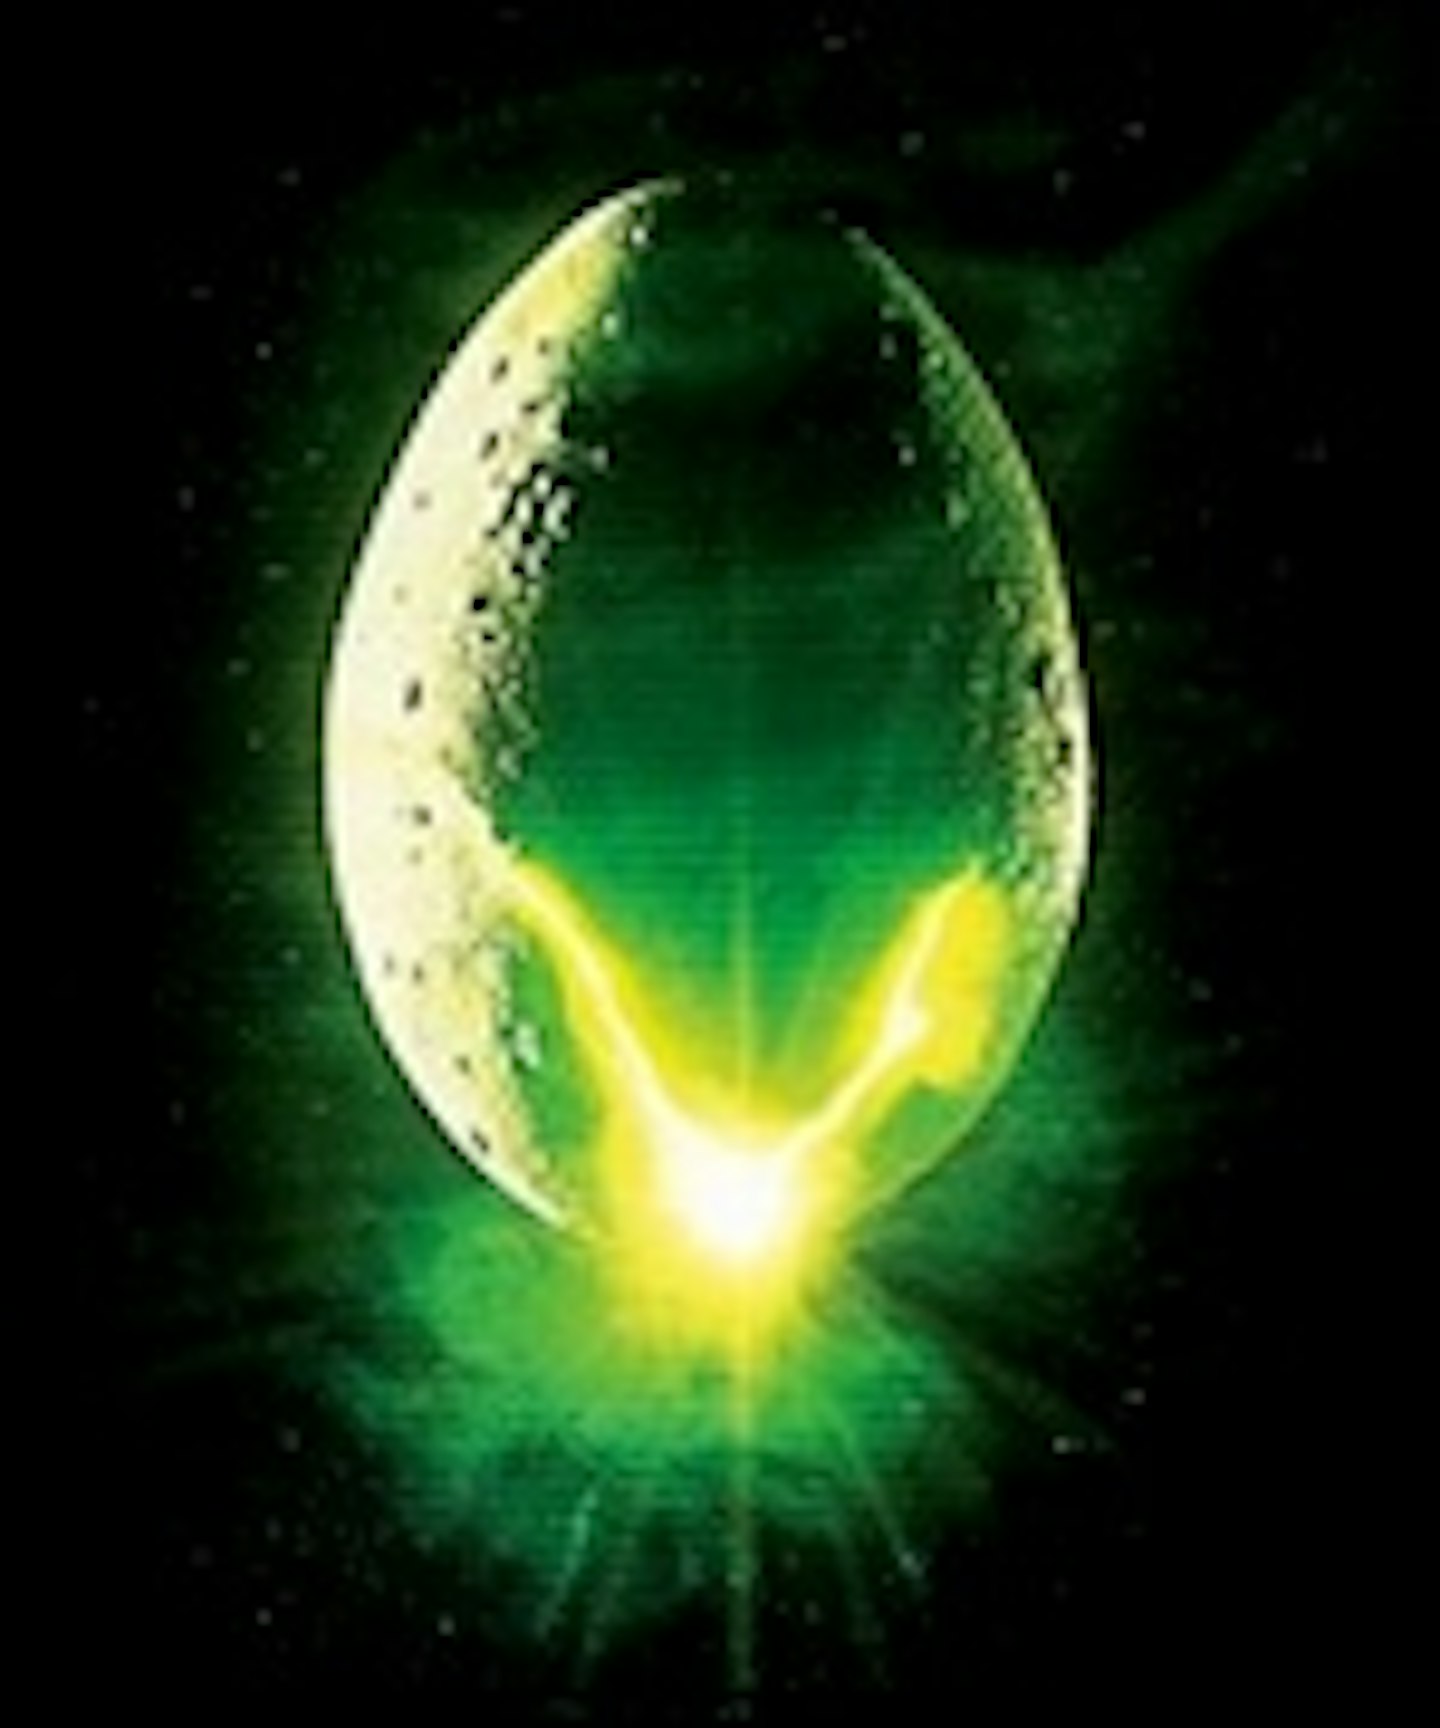 Lindelof Re-Writing Alien Prequel?